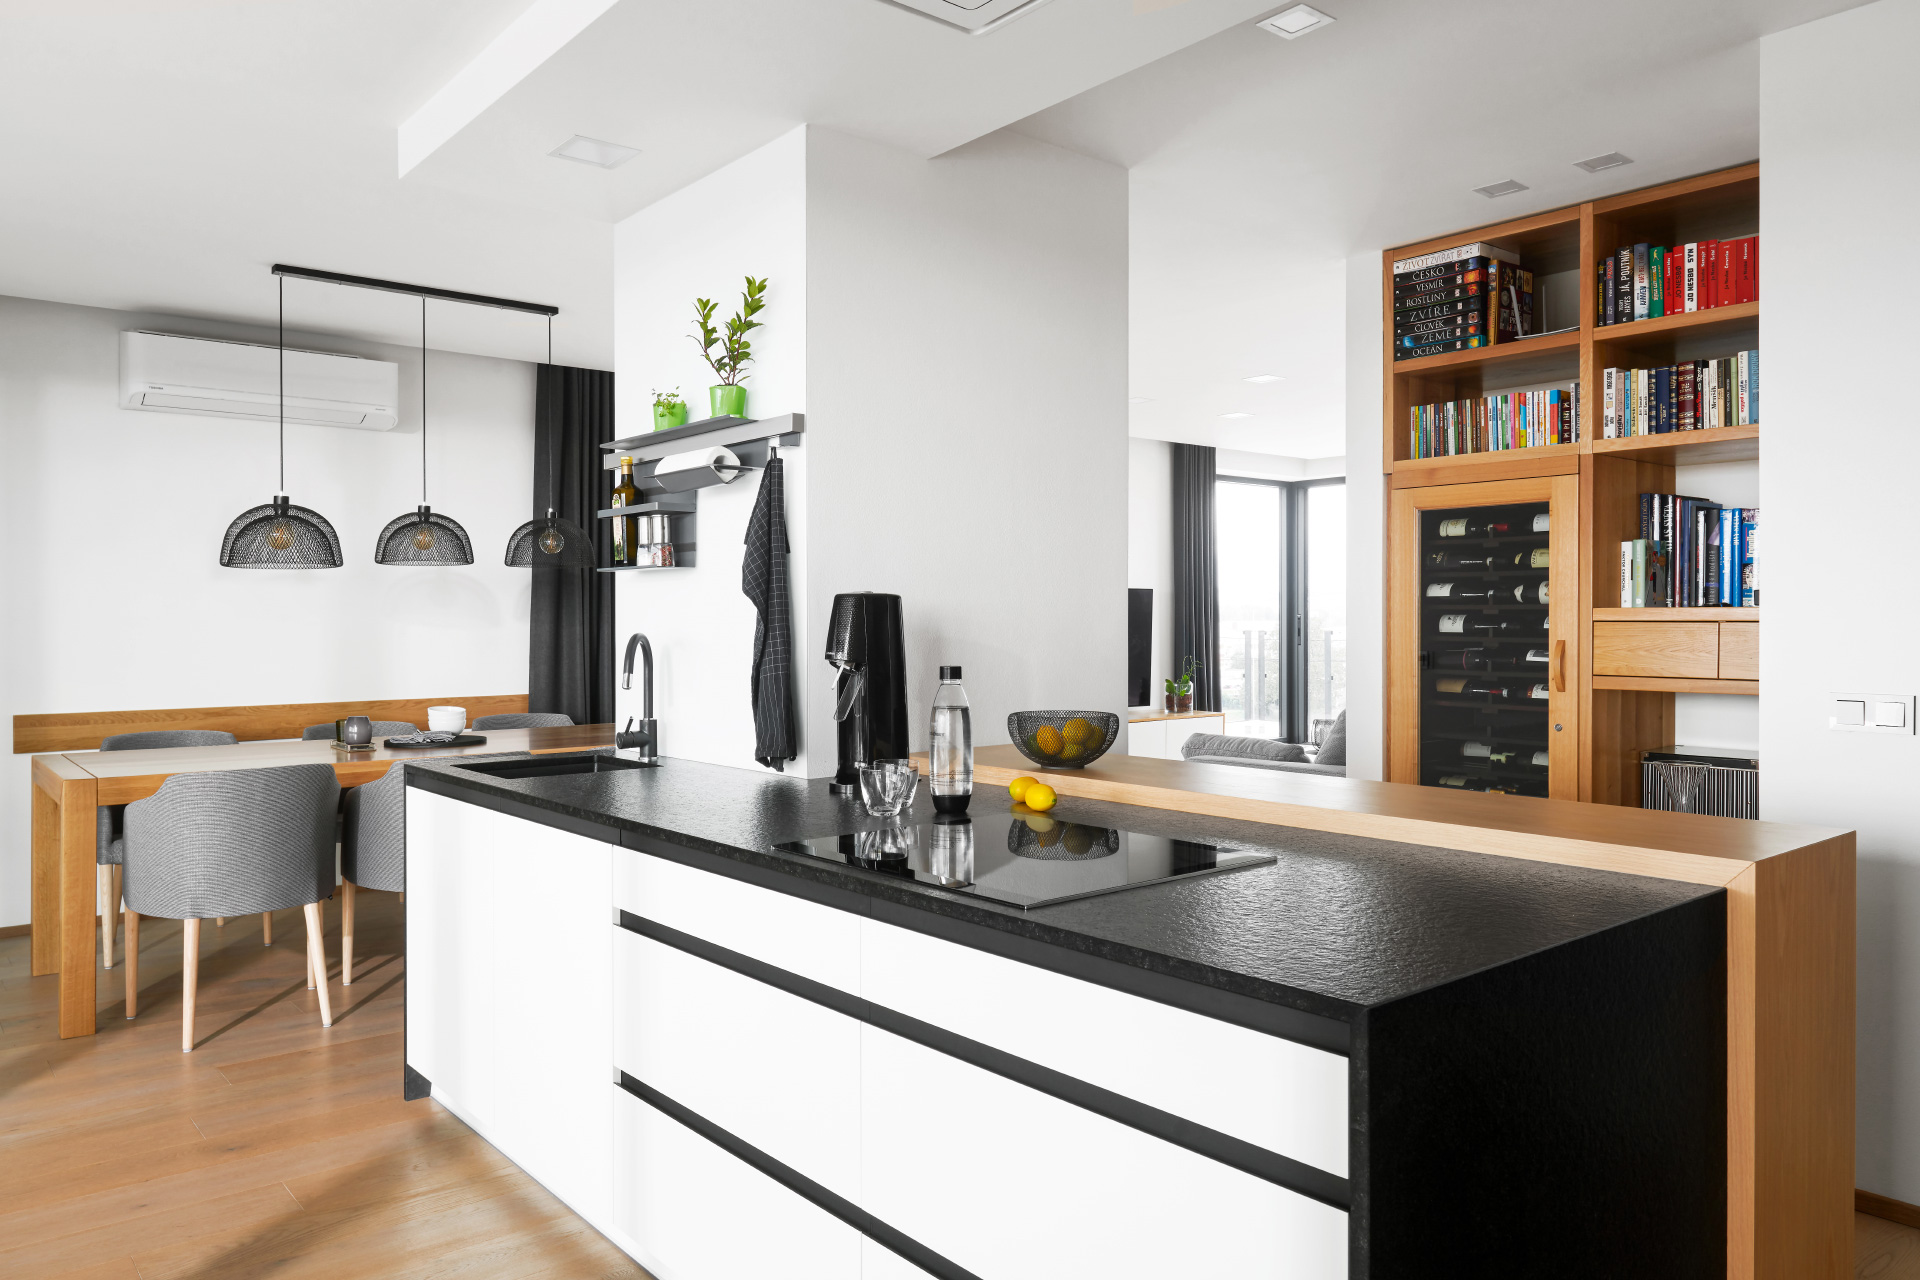 Hanák nábytek kuchyně SIMPLE/STYLE